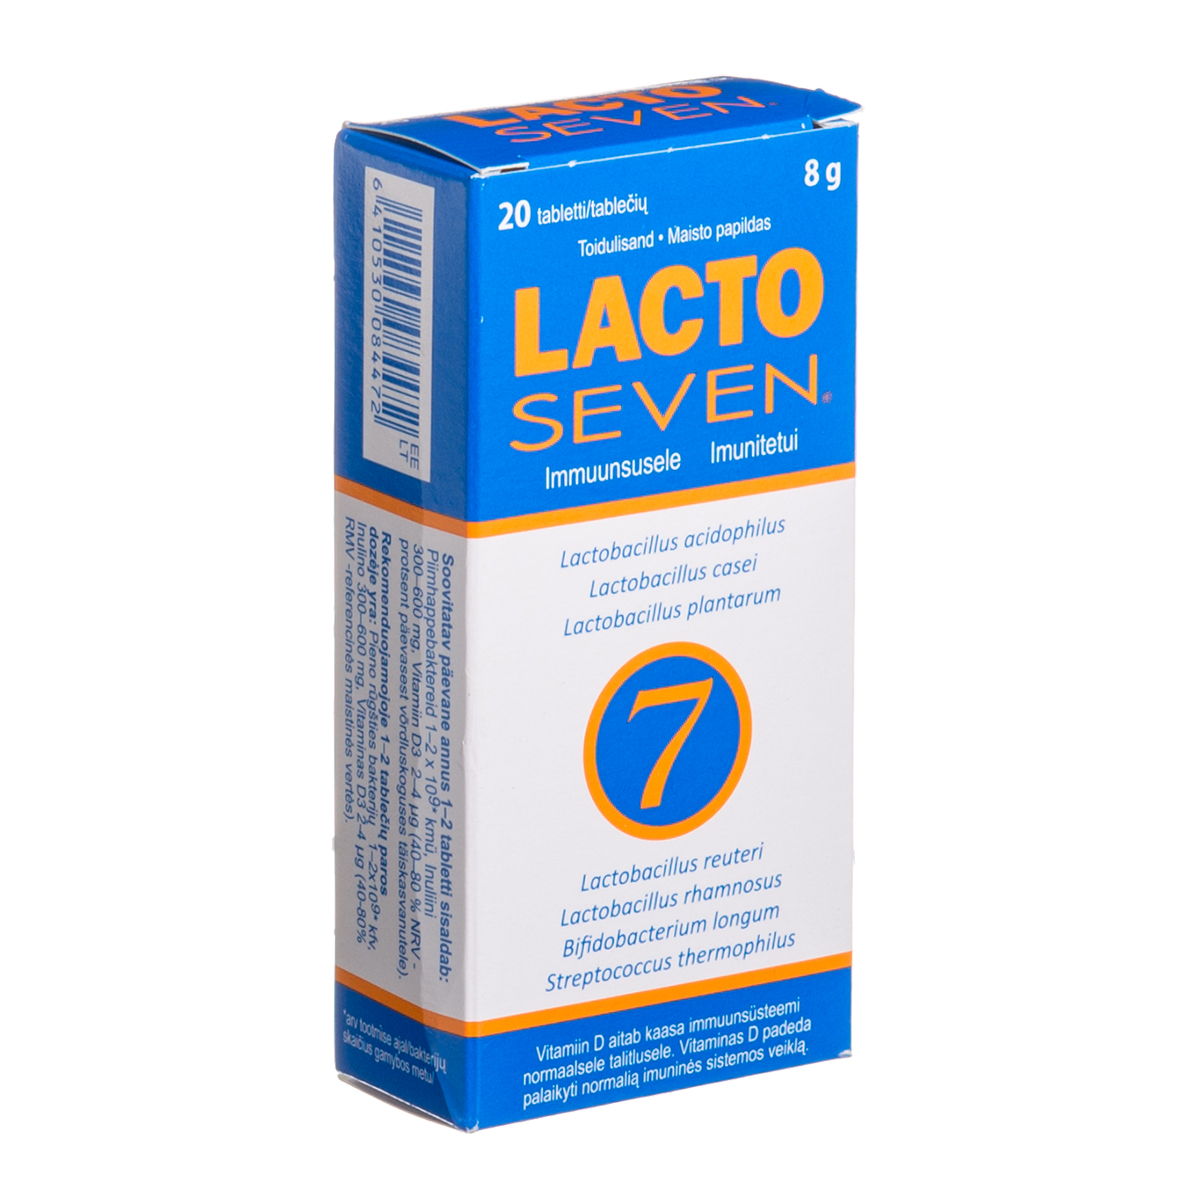 LACTO SEVEN, 20 tablečių